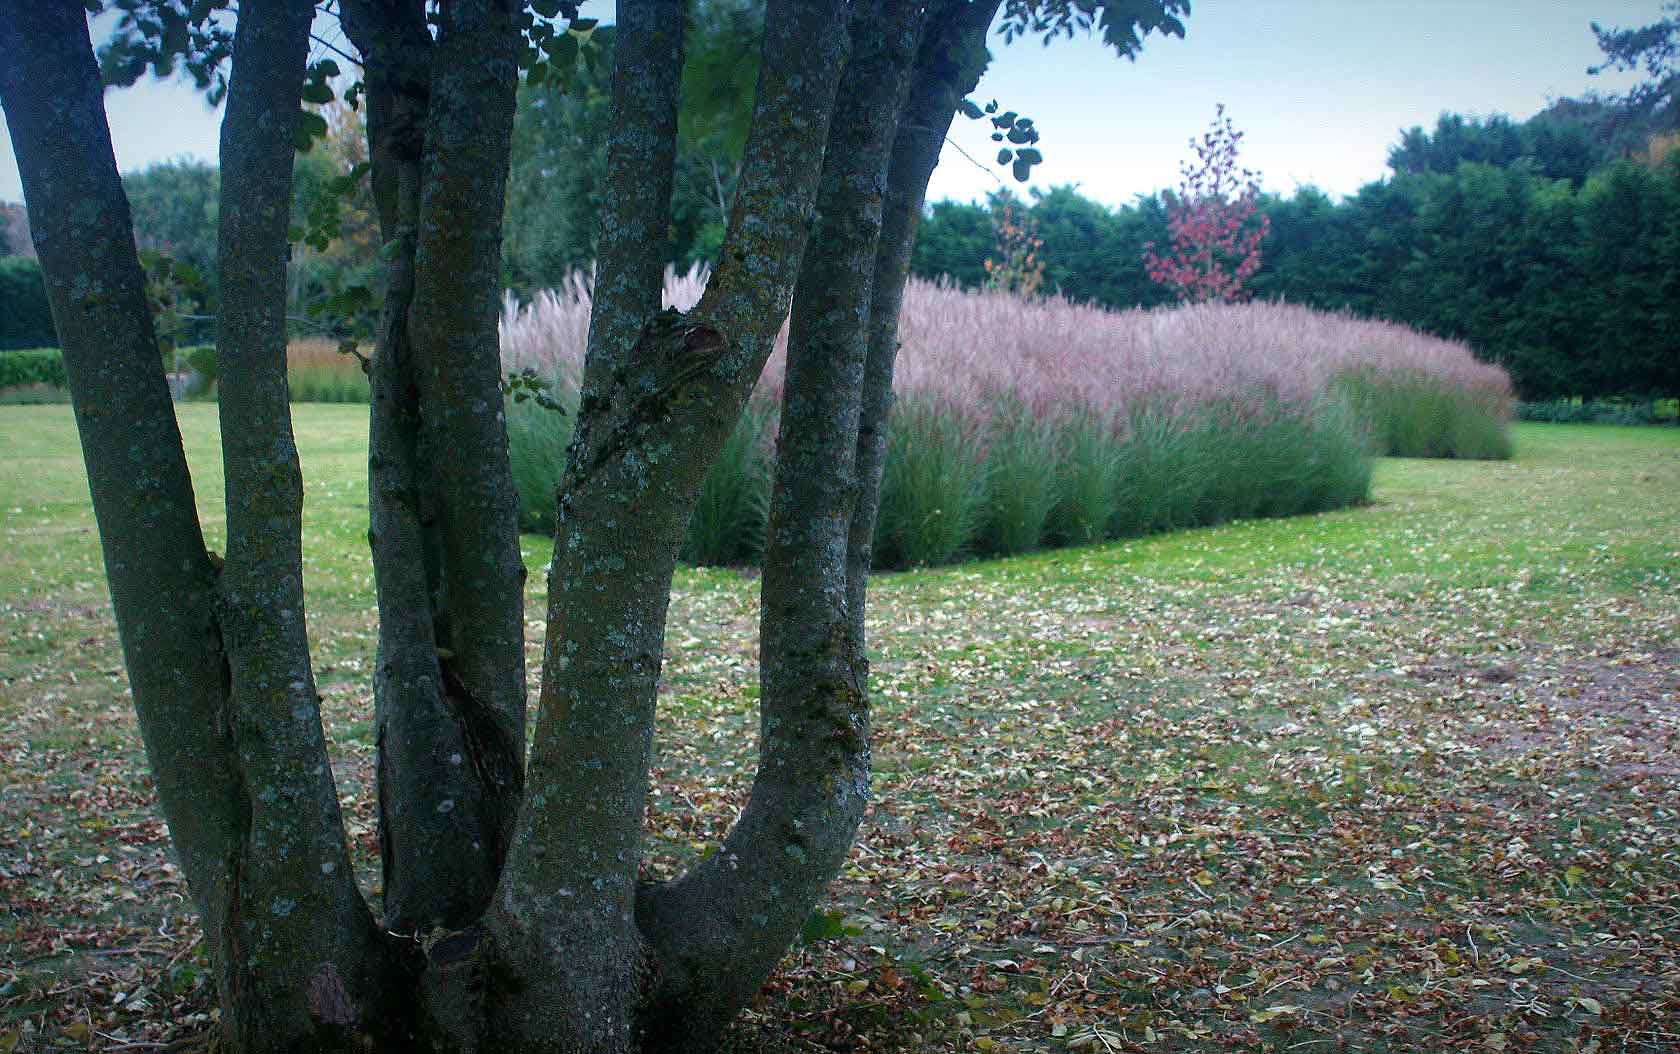 Rural family garden lawn and trees. Rae Wilkinson Garden and Landscape Design - Garden Designer Sussex, Surrey, London, South-East England